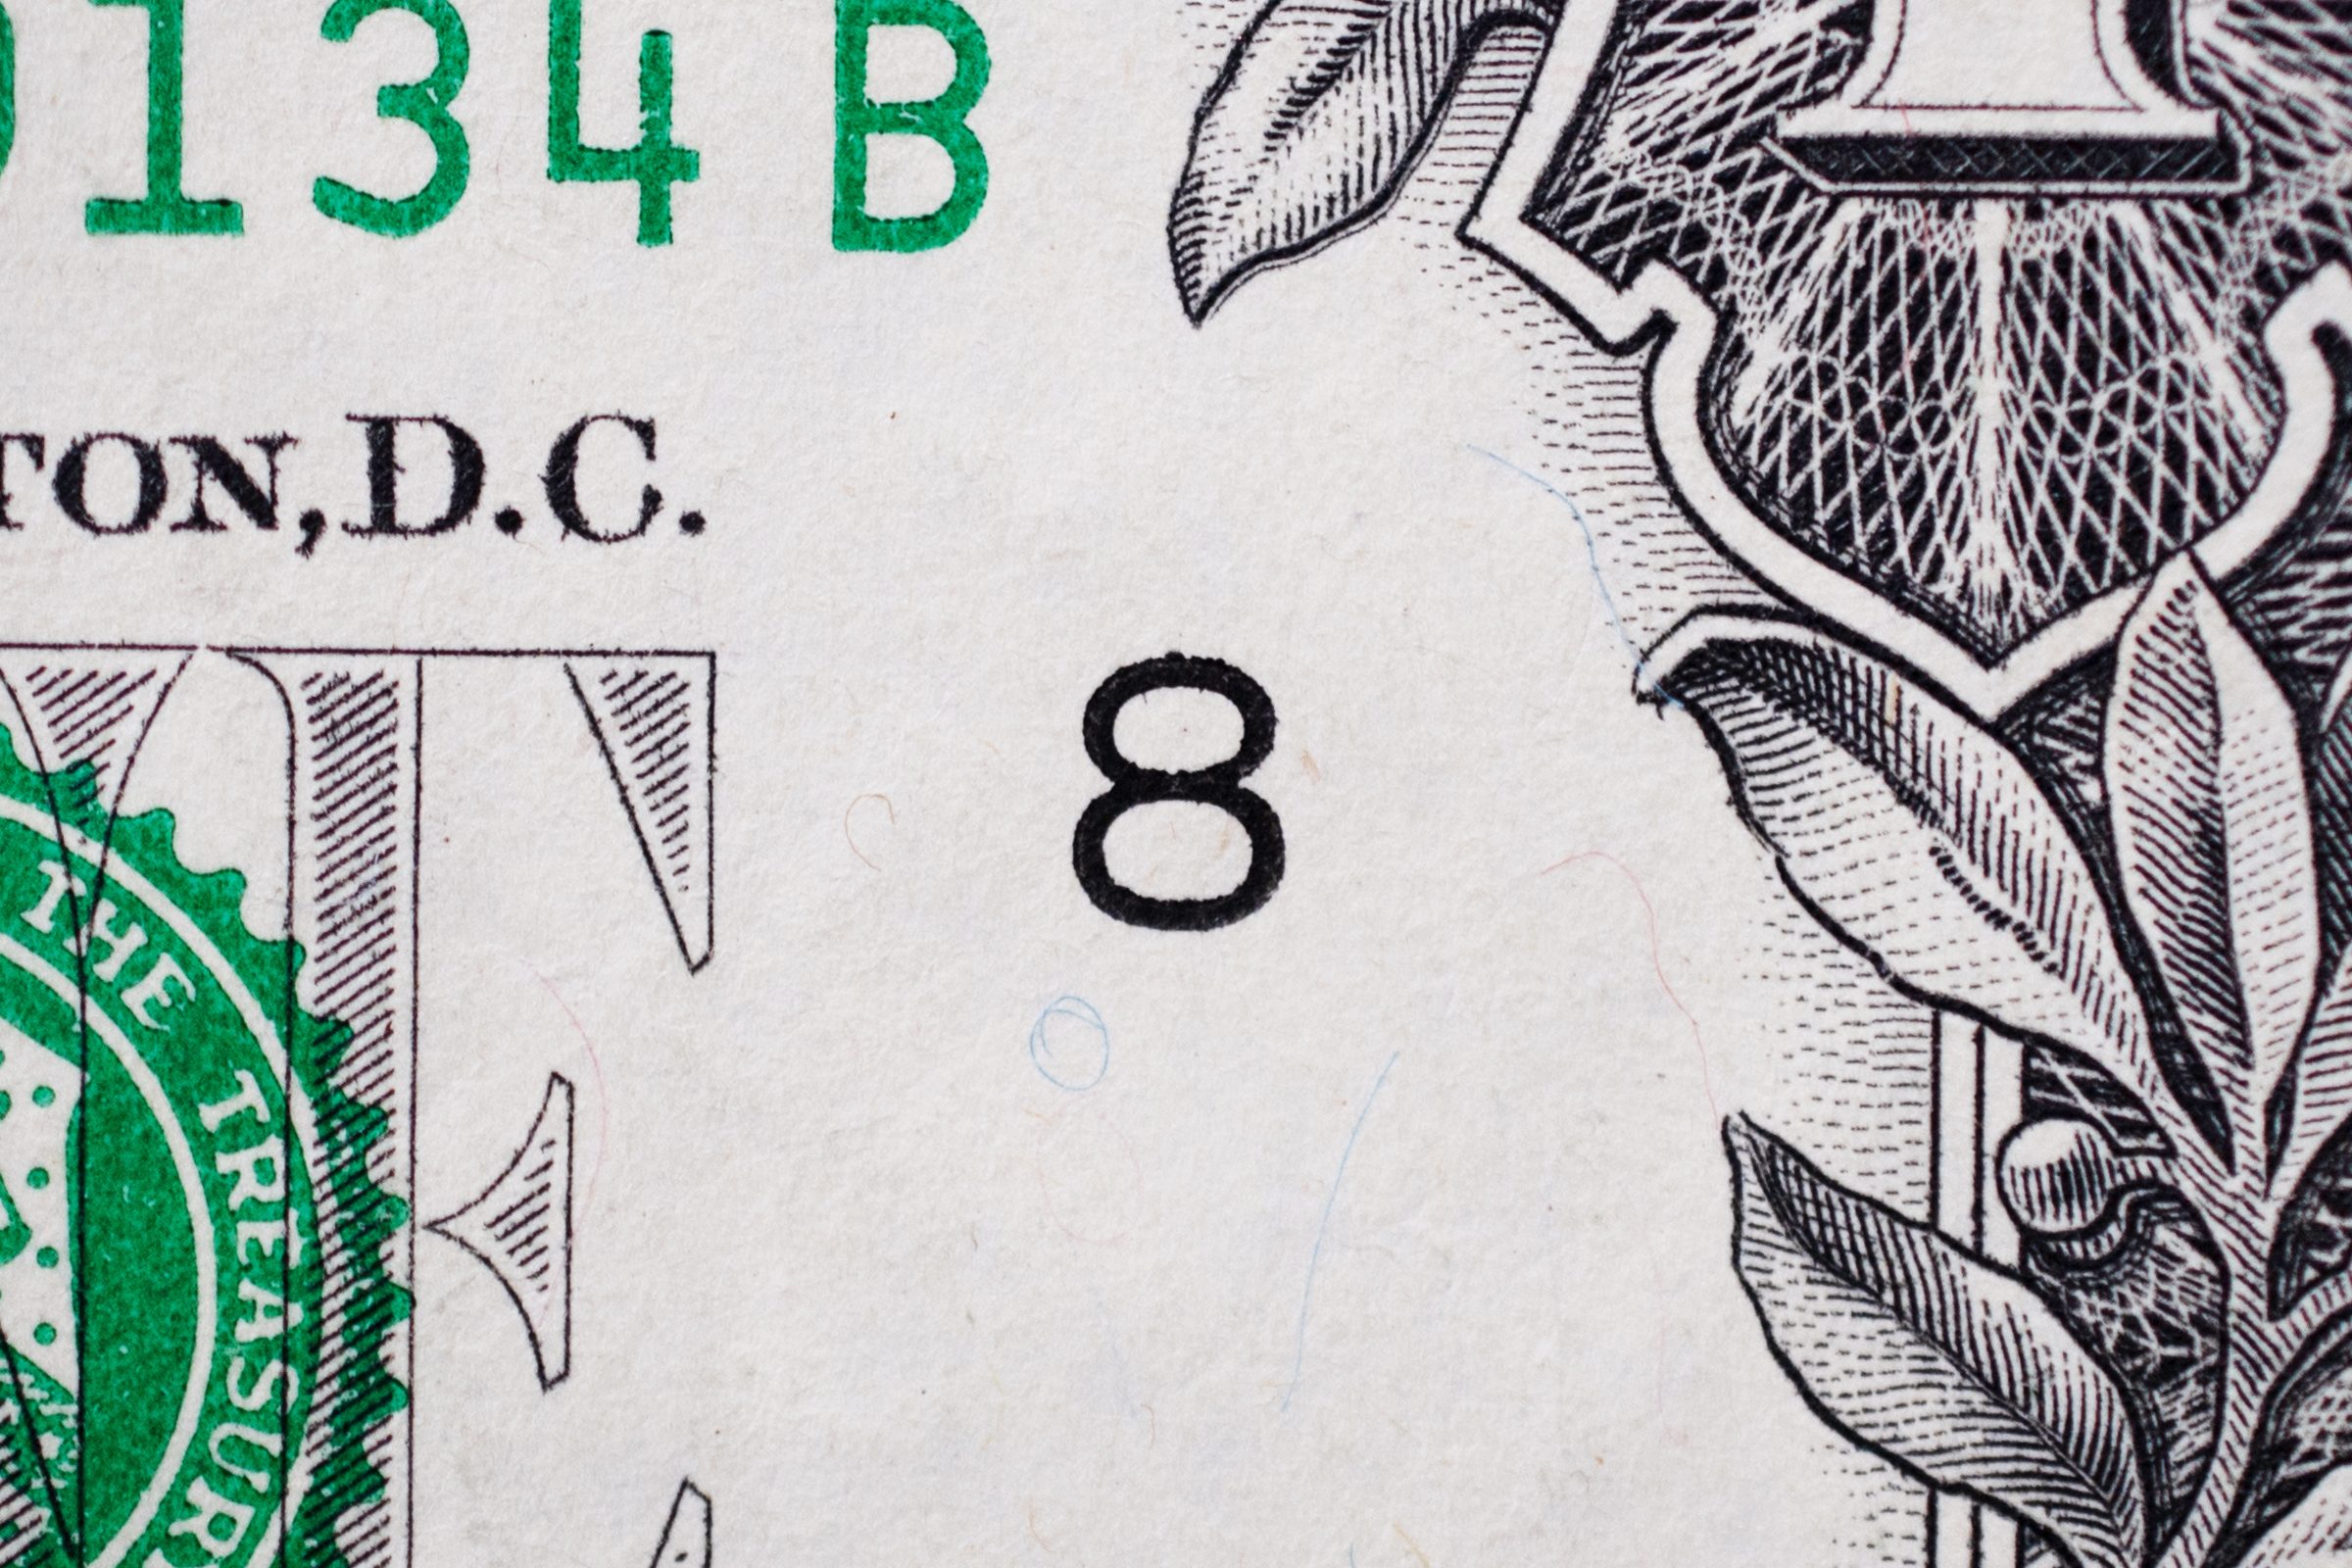 Federal Reserve District Number Dollar Bill